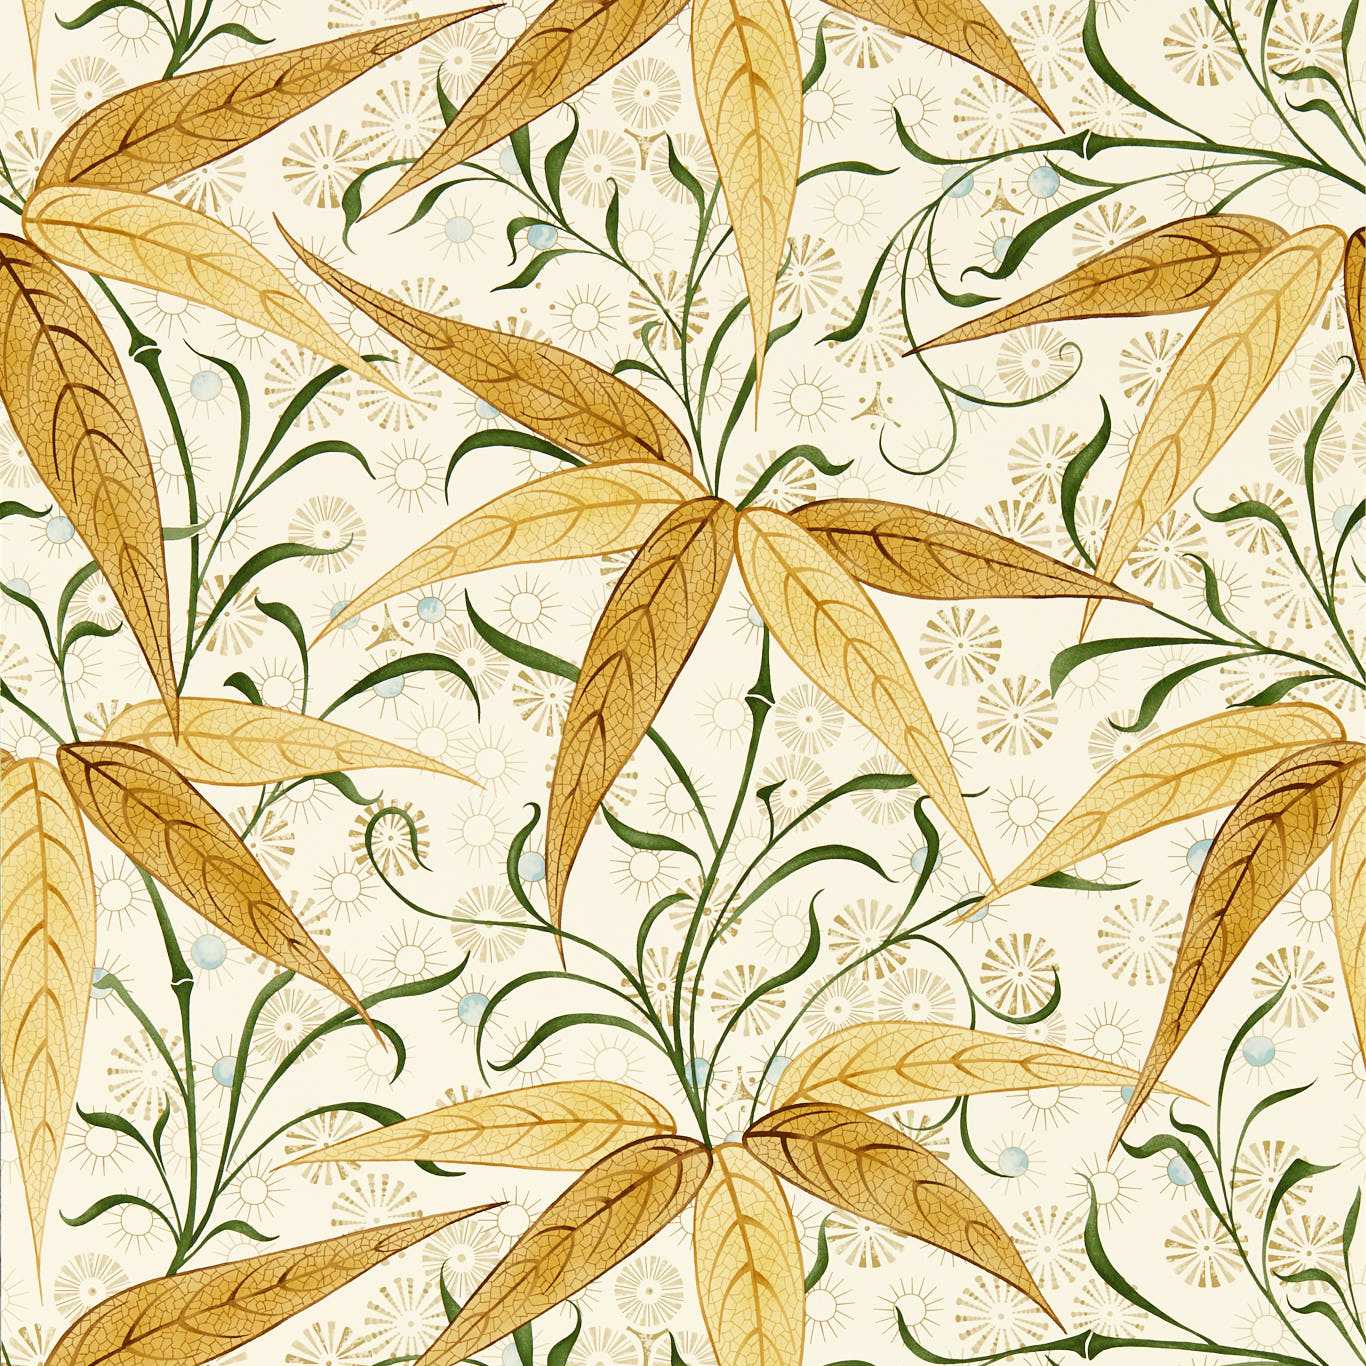 Bamboo Sunflower Wallpaper MFRW217358 by Morris & Co